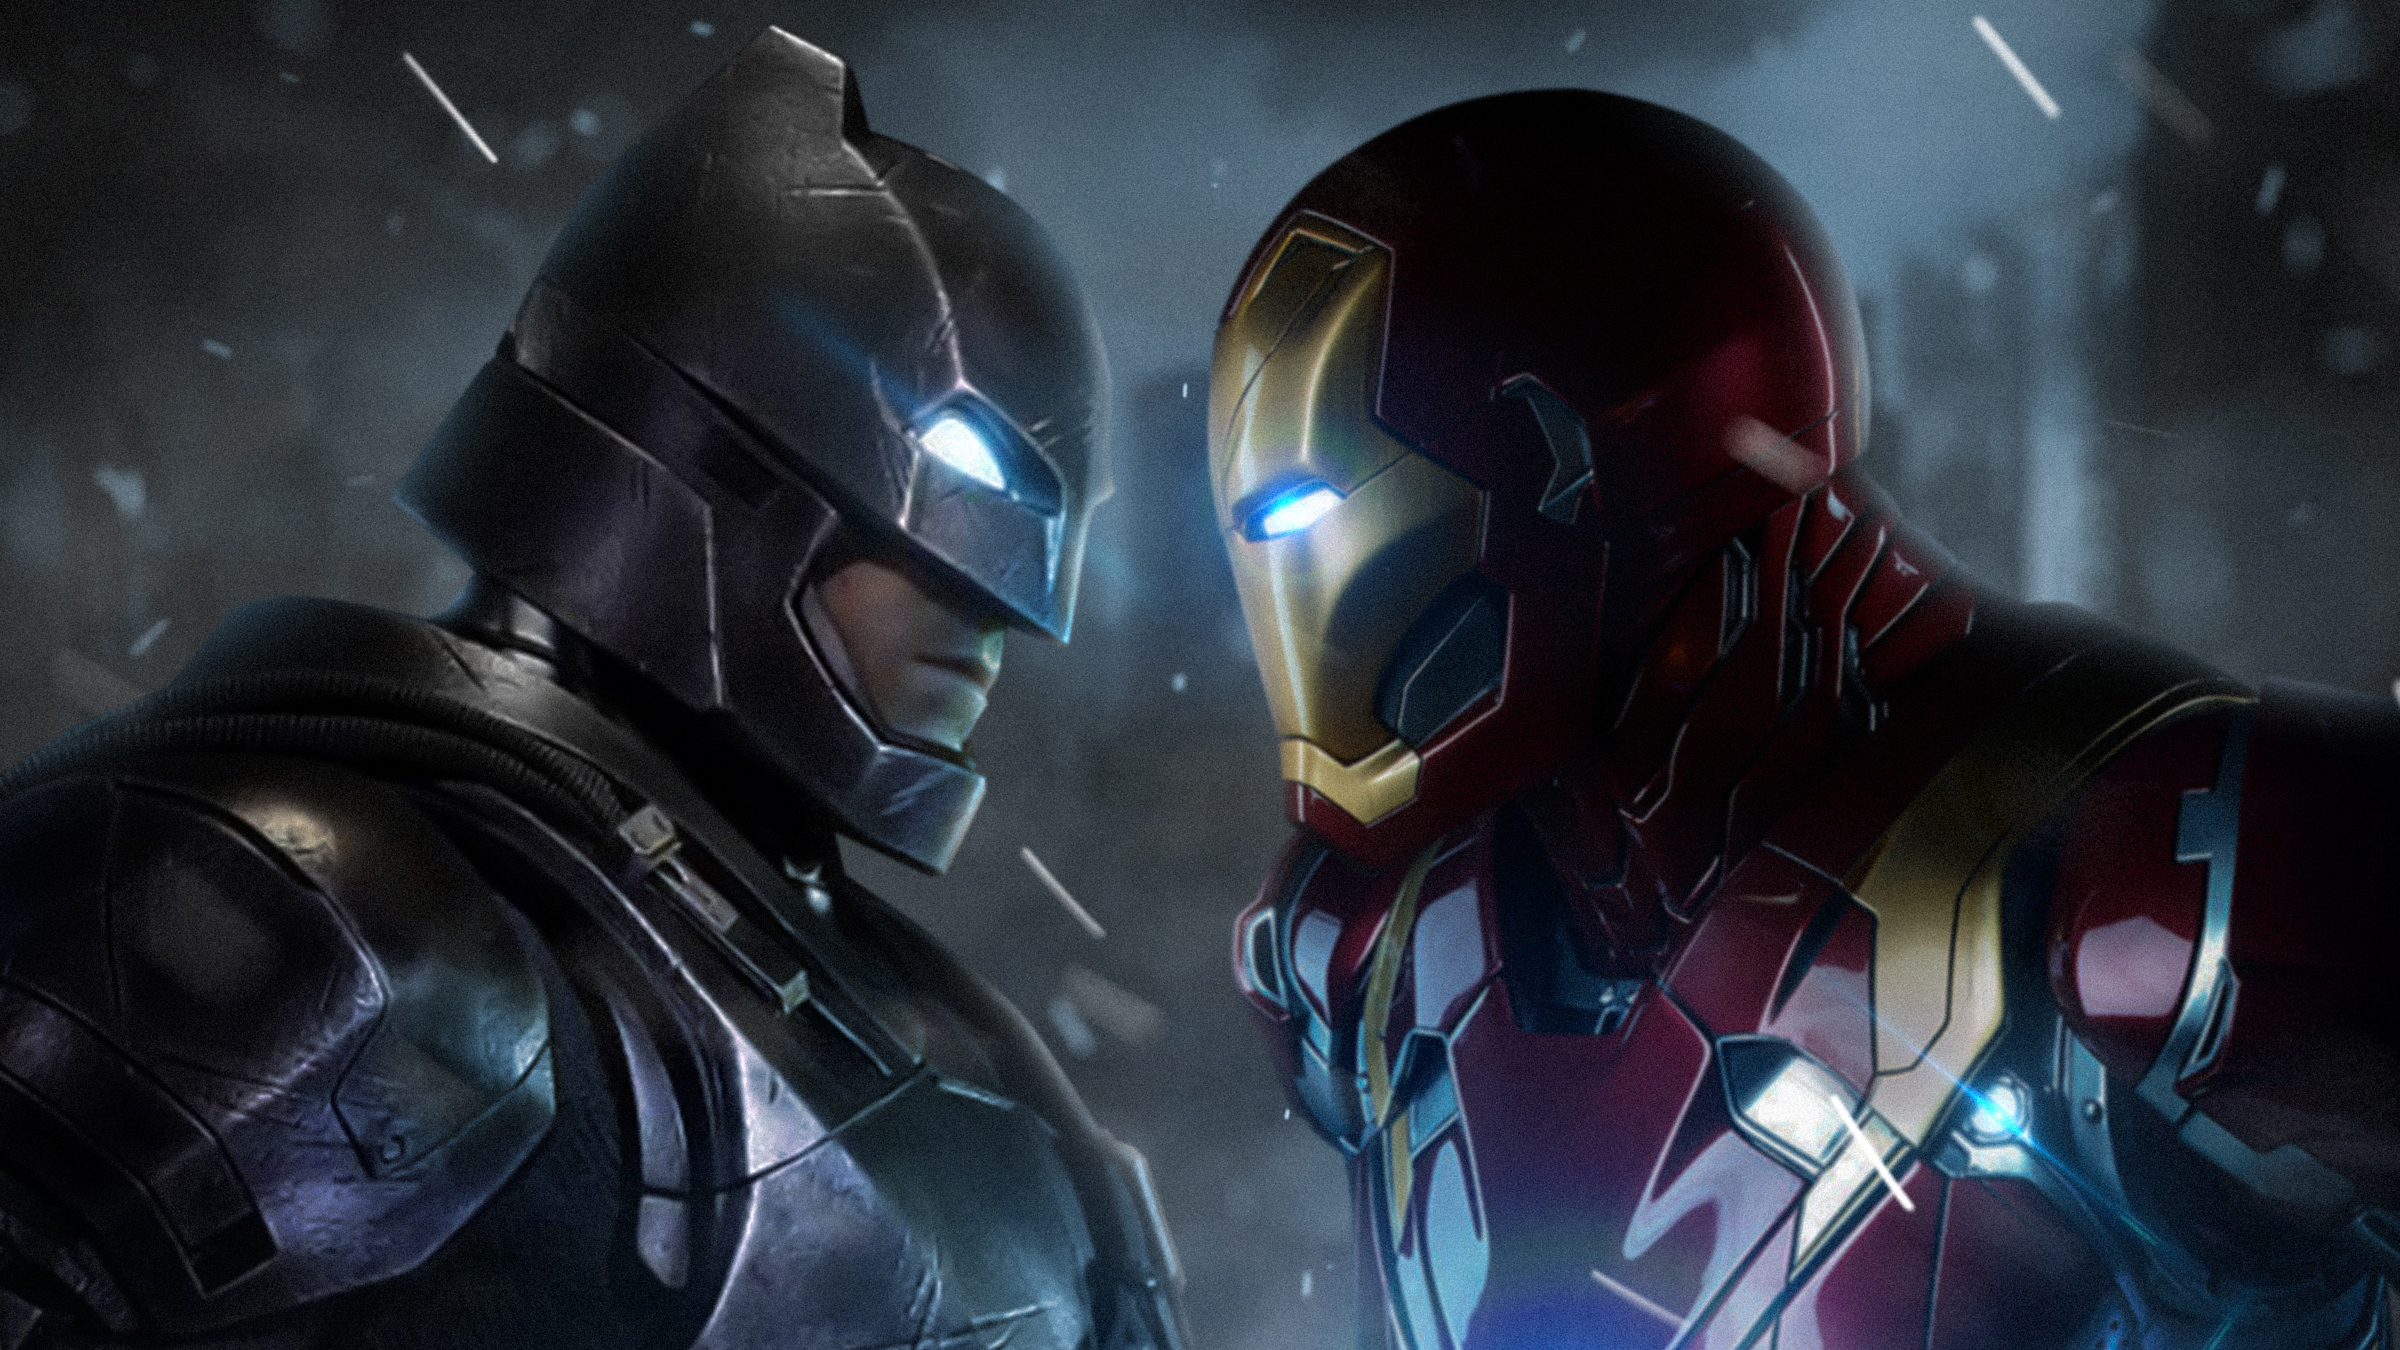 Batman Vs Iron Man, HD Superheroes, 4k Wallpapers, Images ...